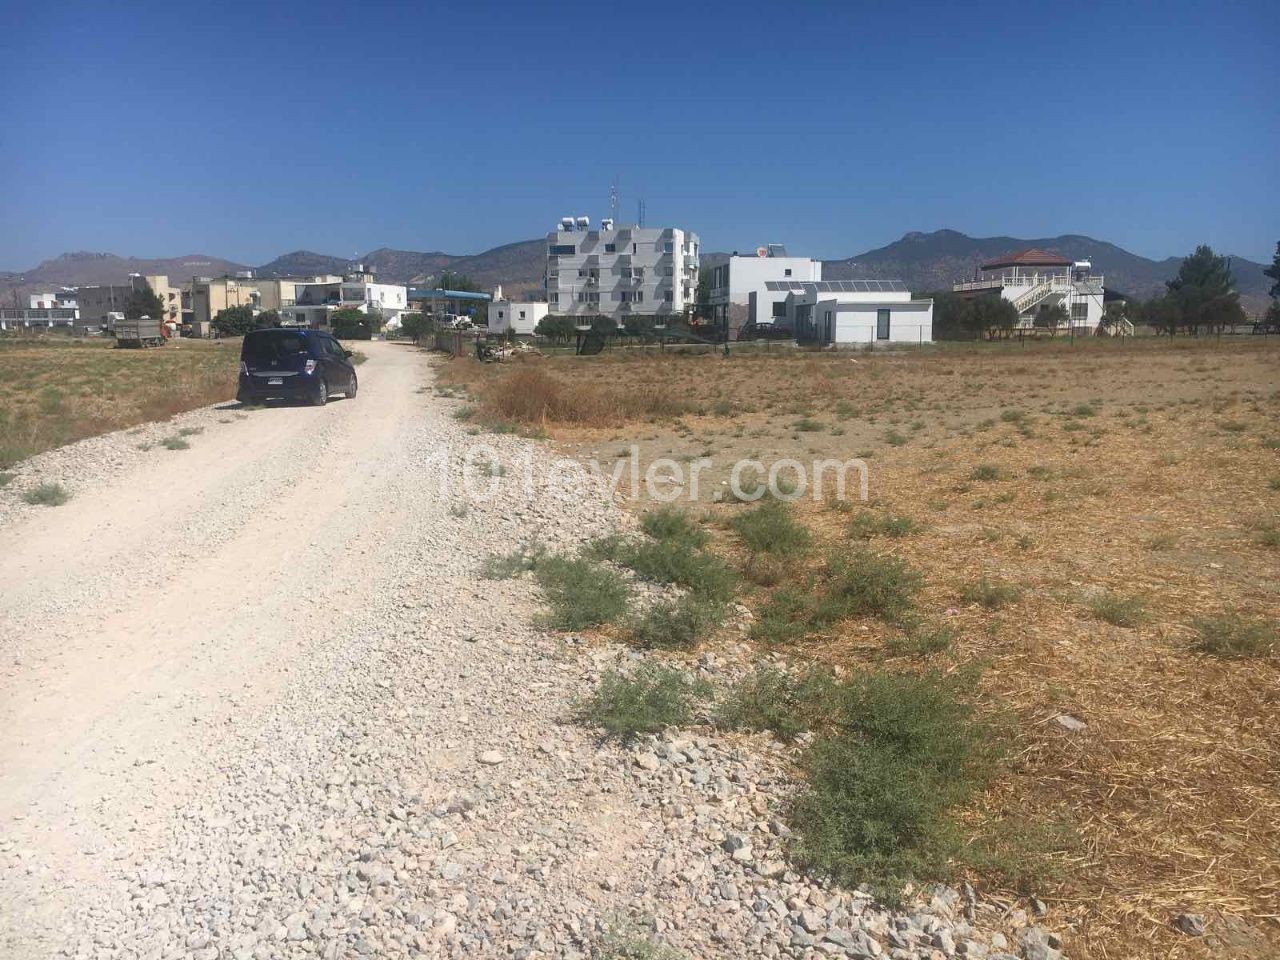 Land for sale in Nicosia Cihangirde 8 acres 2 houses 1800a2, decare 20.000 stg ** 